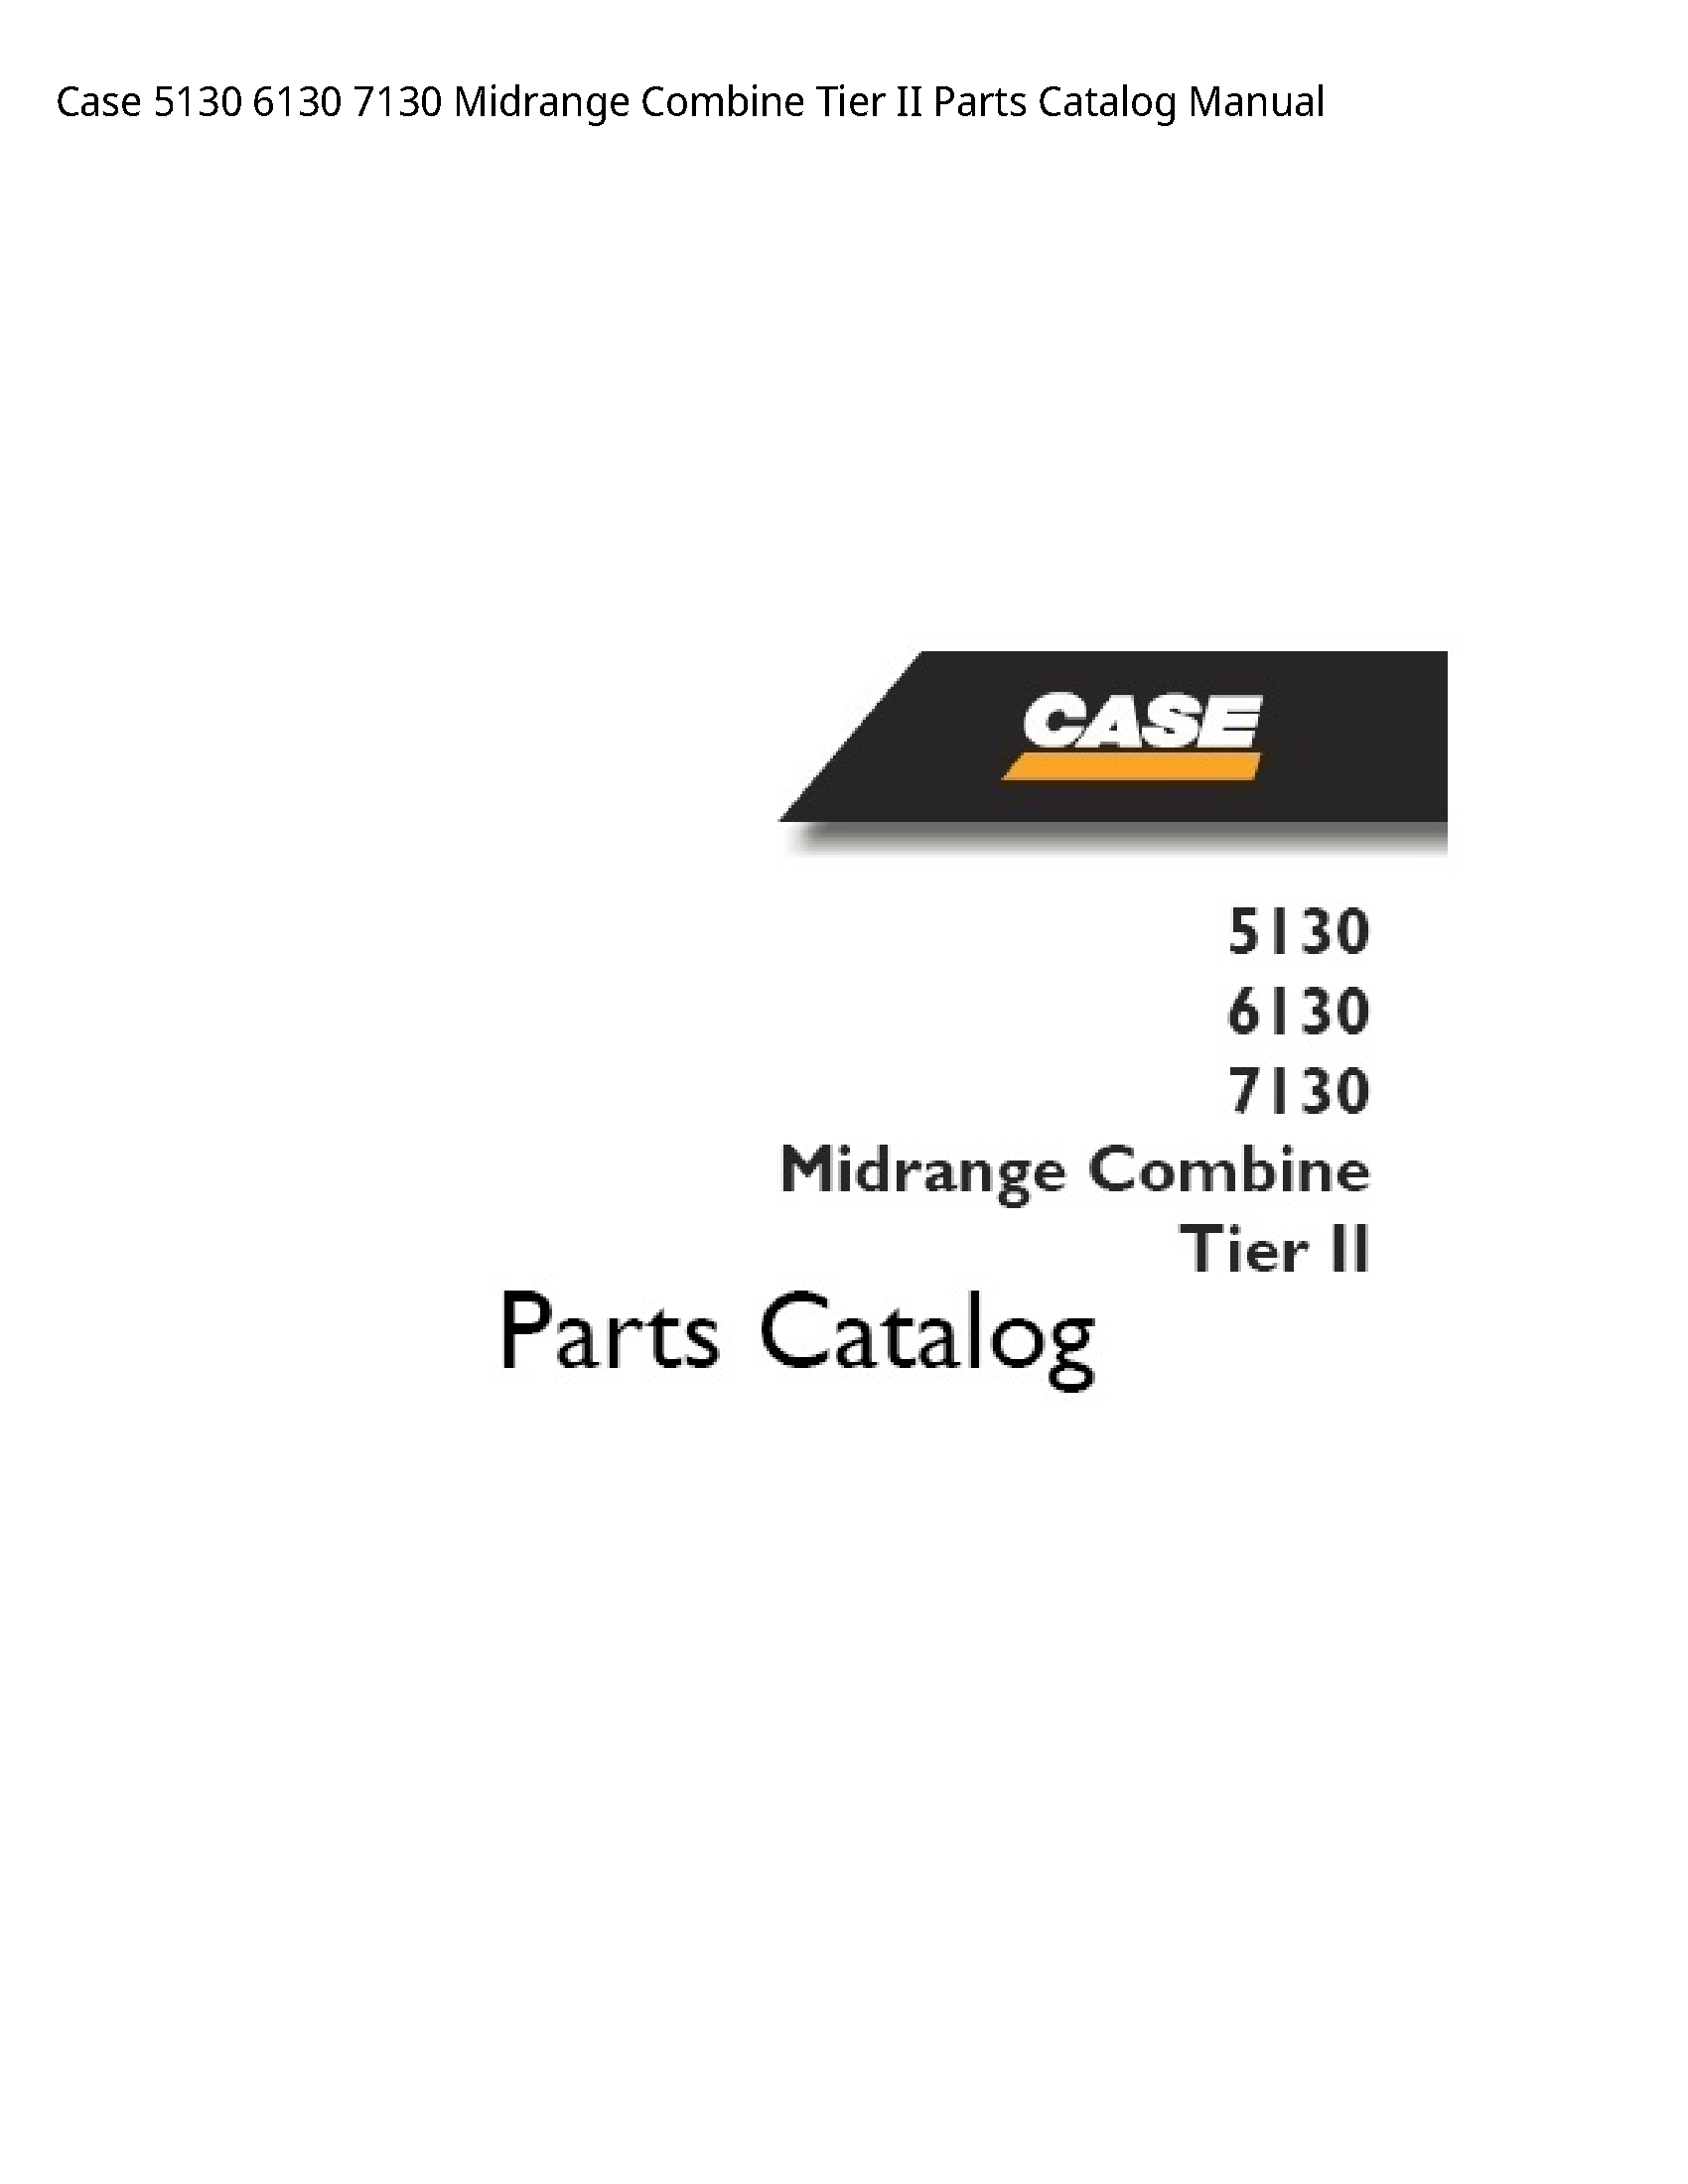 Case/Case IH 5130 Midrange Combine Tier II Parts Catalog manual